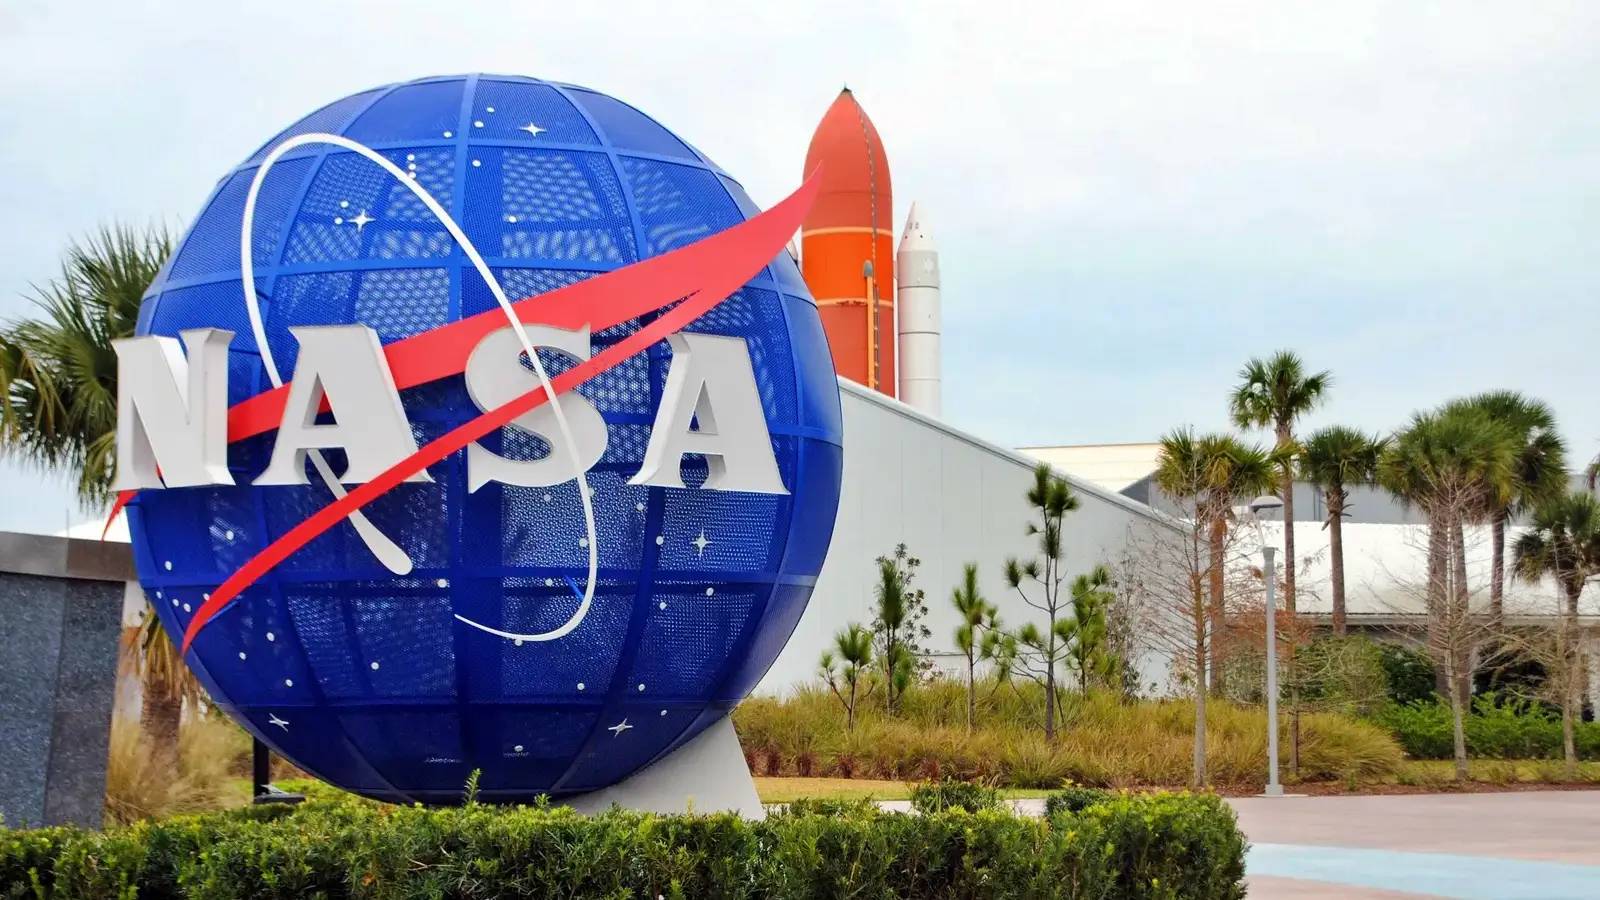 NASA WARNS All Humanity Millions of People Danger